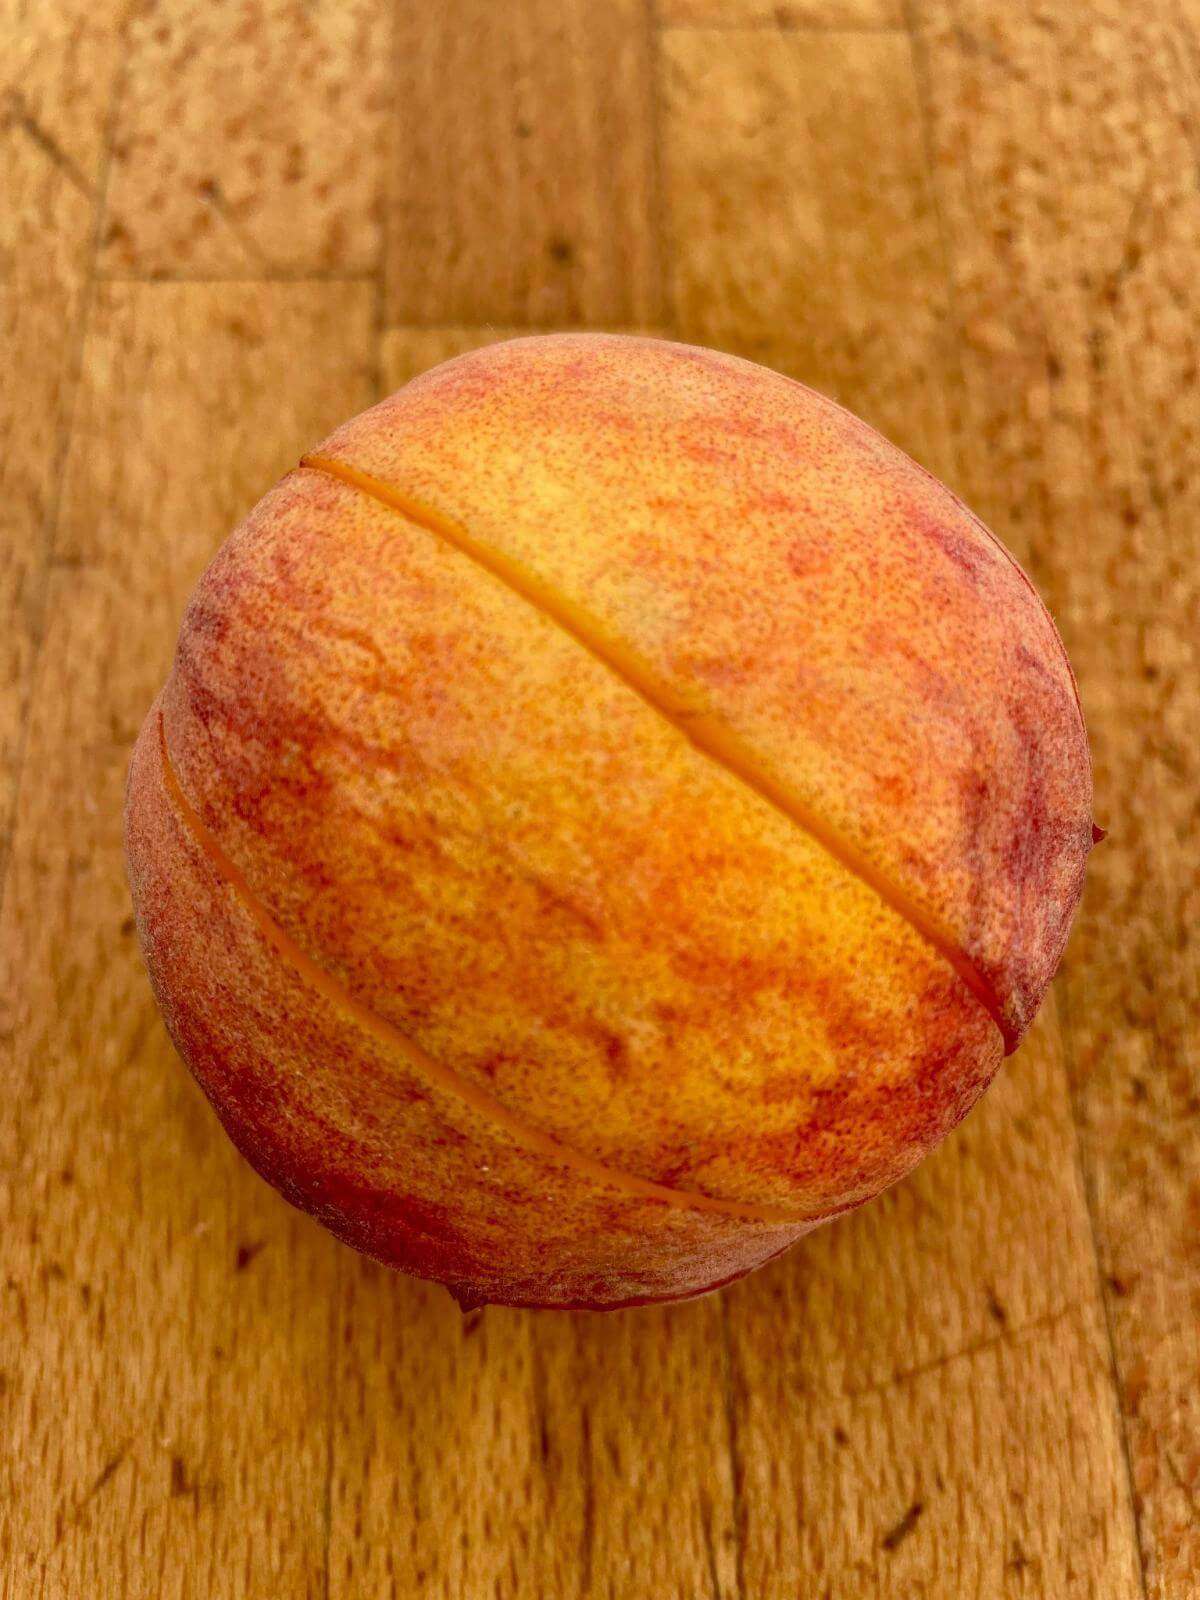 Whole peach cut in segments.